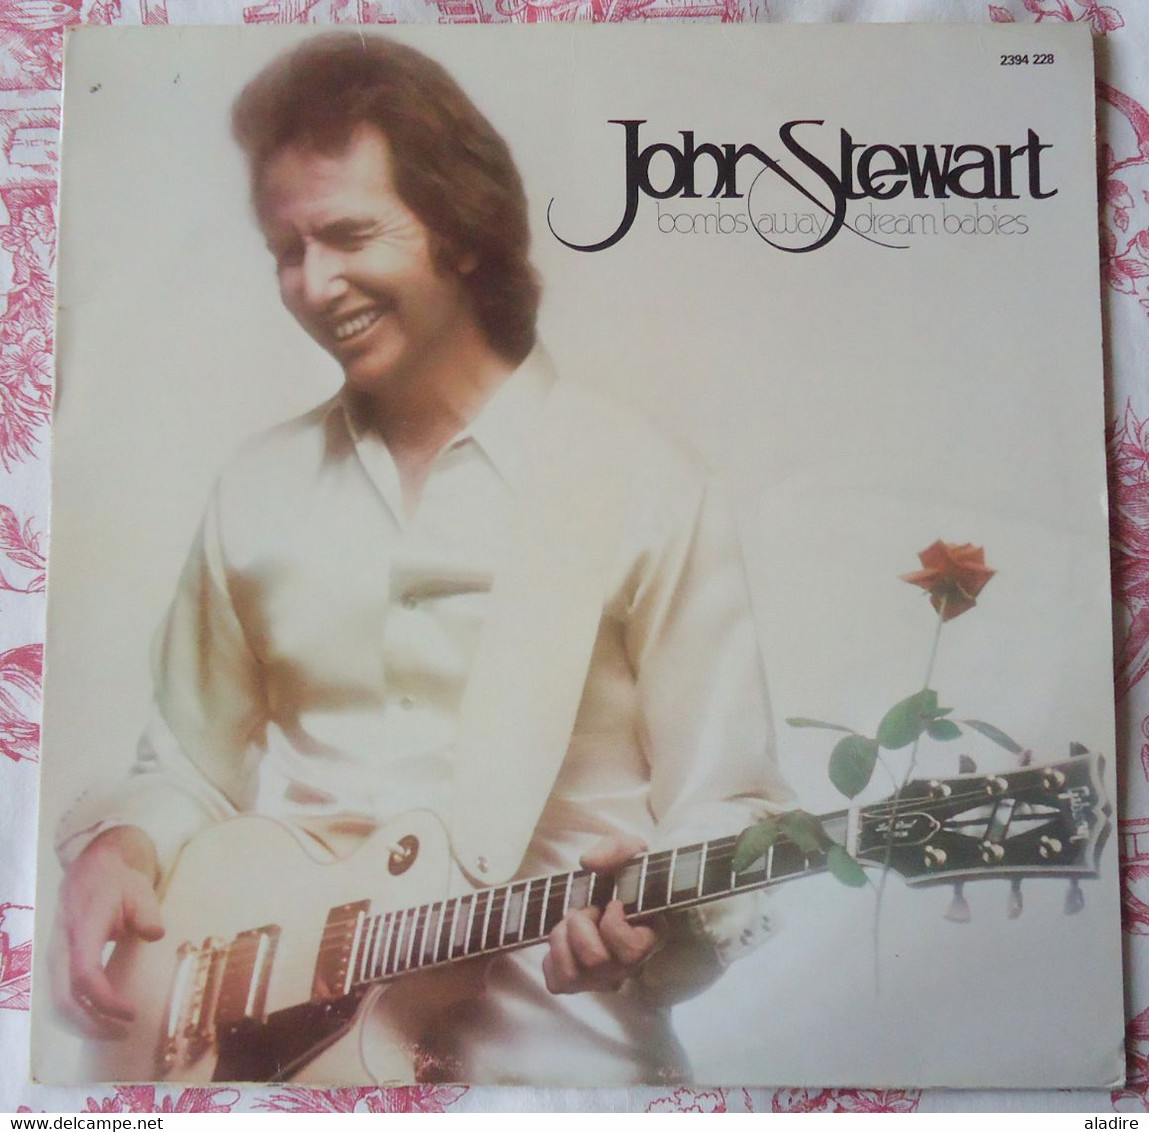 JOHN STEWART - Bombs Away Dream Babies - Warner Bros Records, 1979 - Country Et Folk